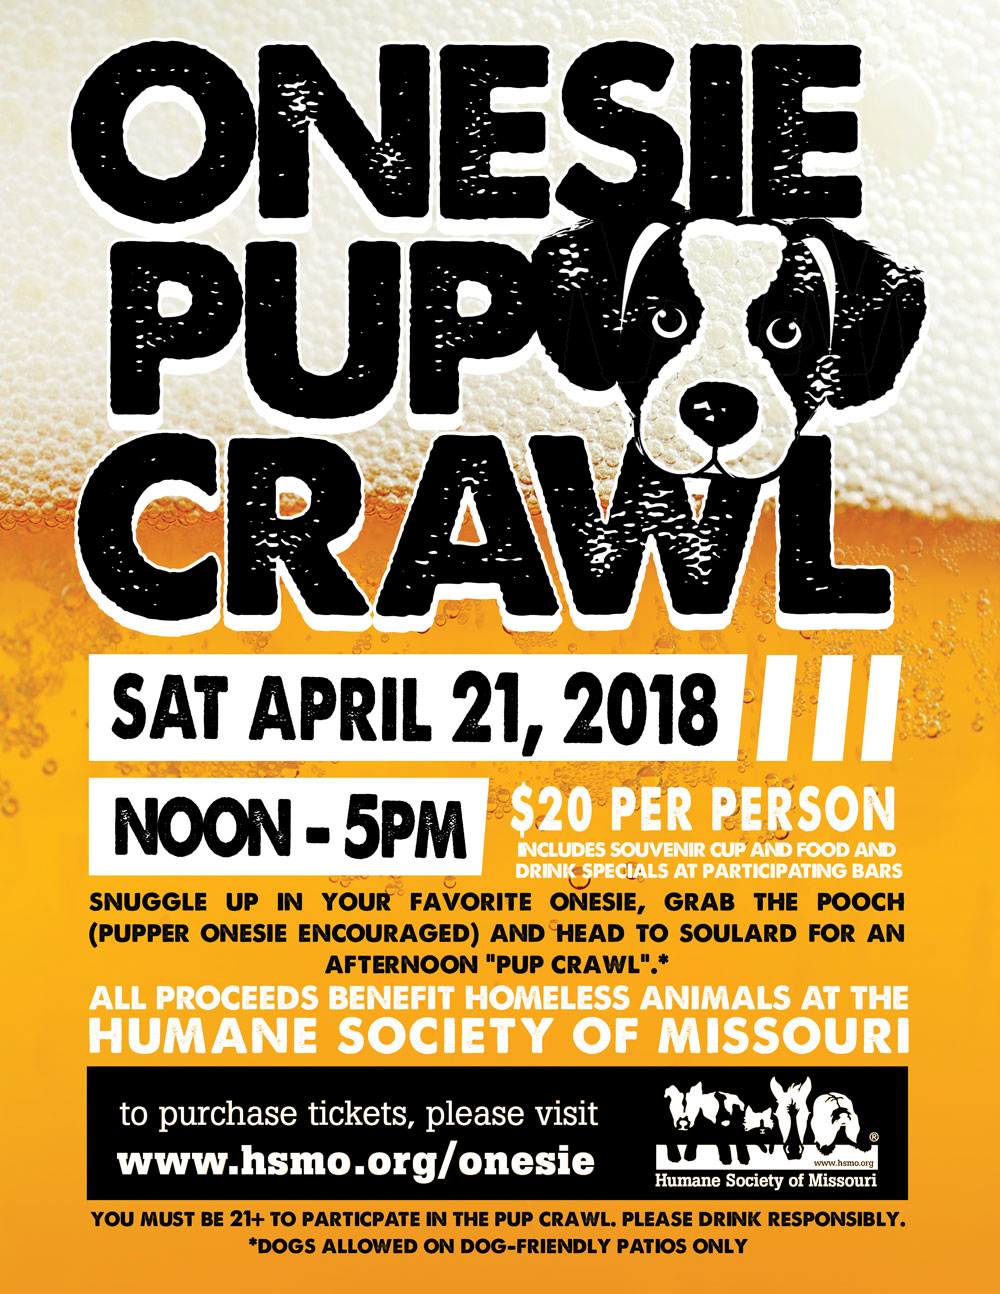 HSMO's Onesie Pup Crawl is on April 21 2018